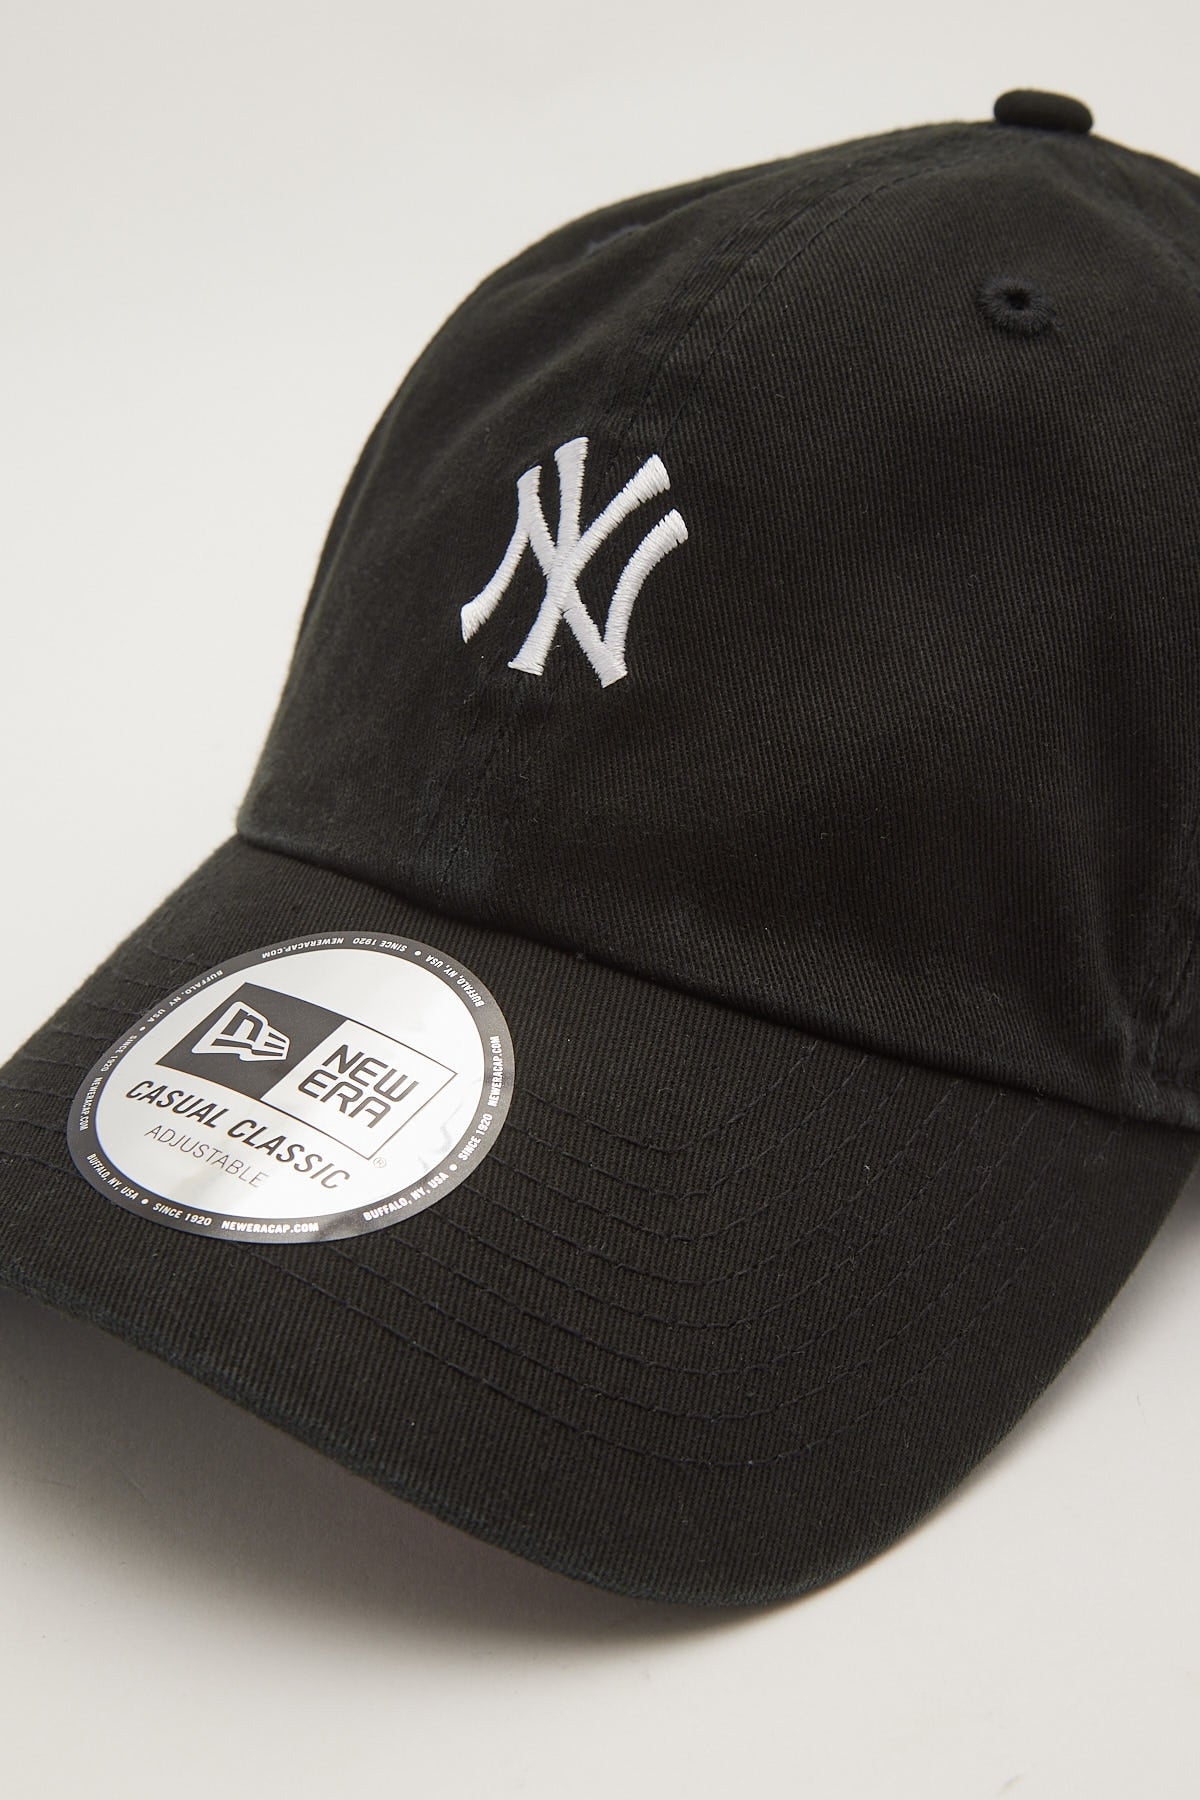 New Era Casual Classic NY Yankees Black – Universal Store